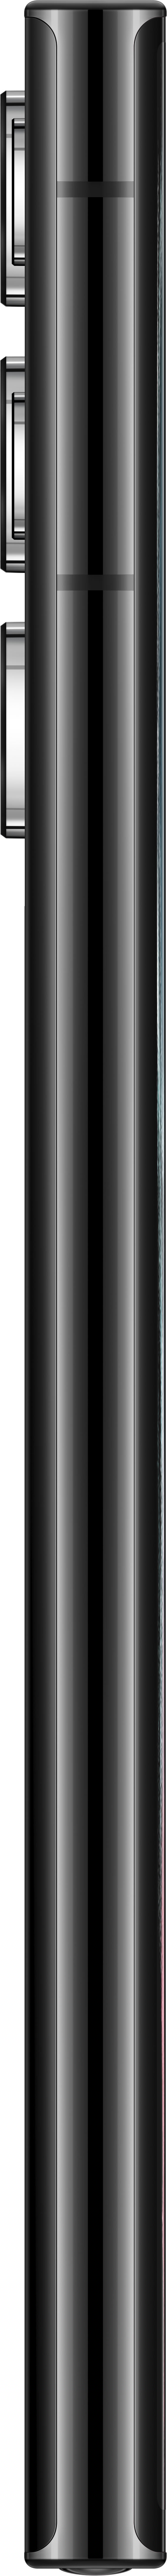 Samsung galaxy S22 ultra 256/12 casi neuf super propre disponible état